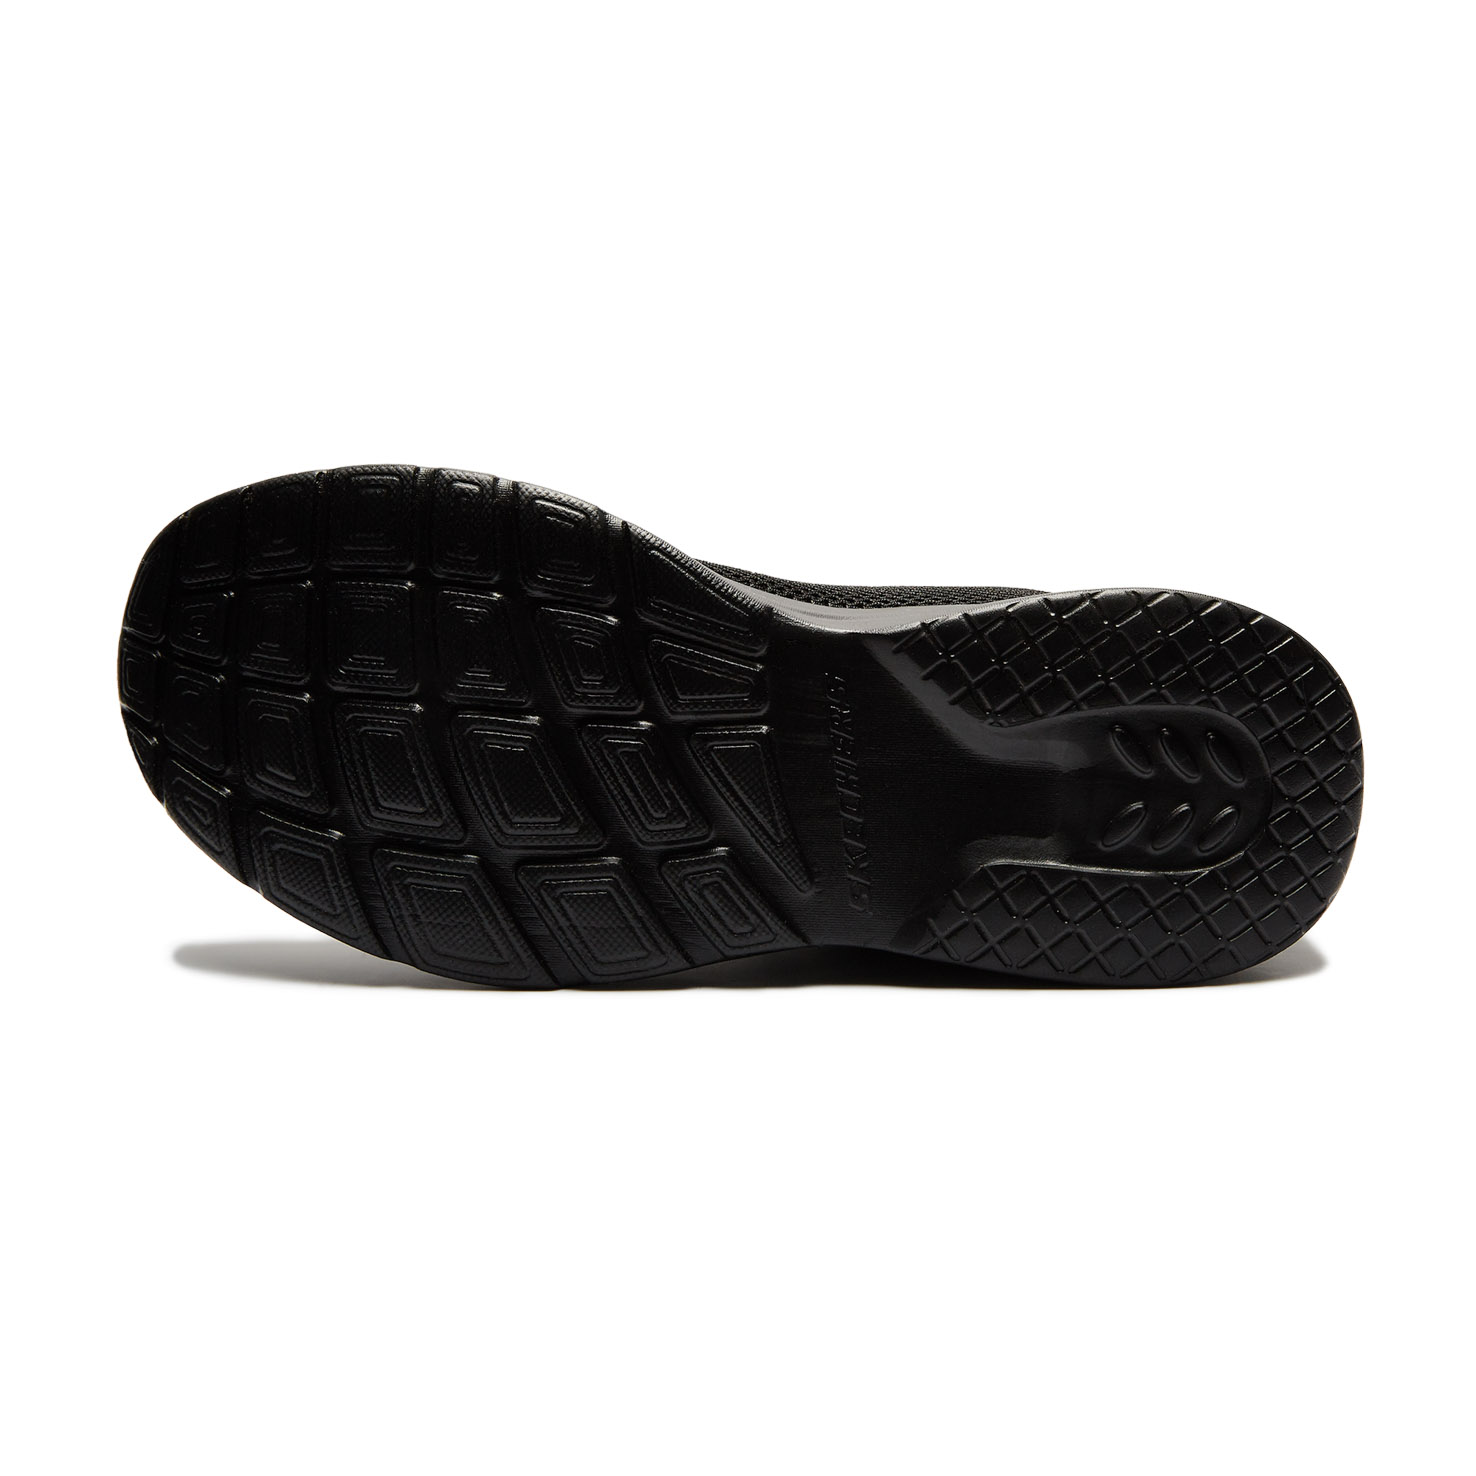 Men's low shoes SKECHERS, размер 41.5, цвет черный SK58362 - фото 6